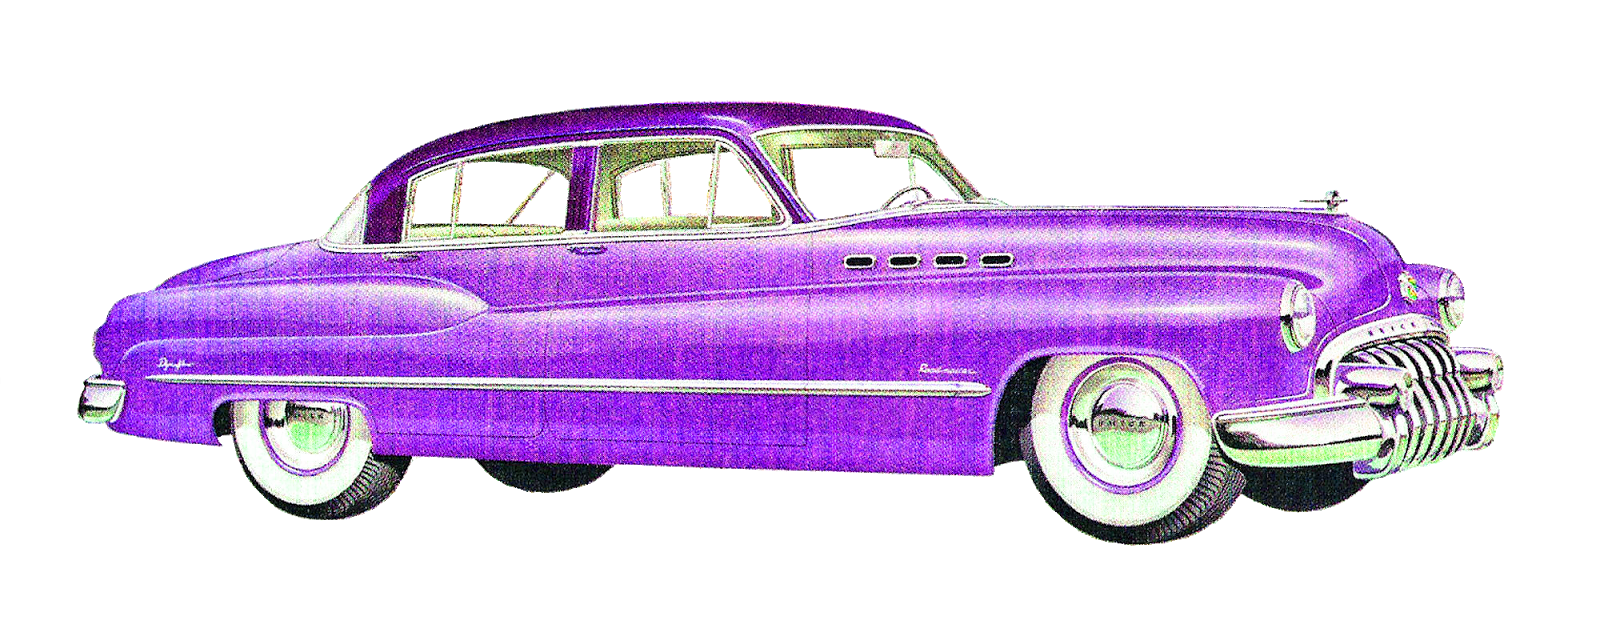 driving clipart purple car